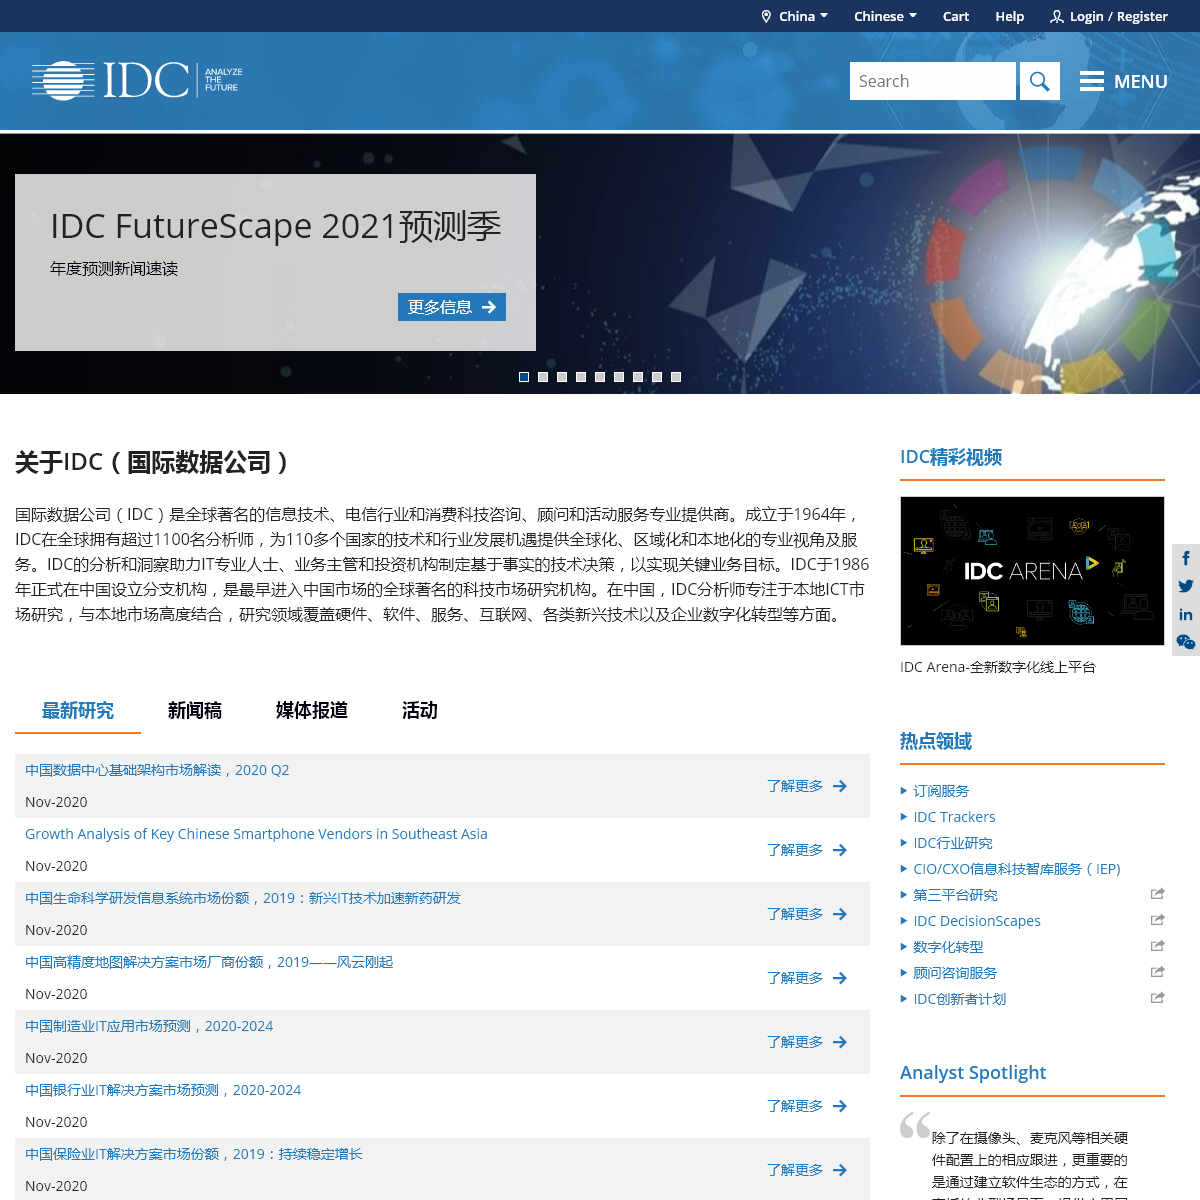 A complete backup of idc.com.cn